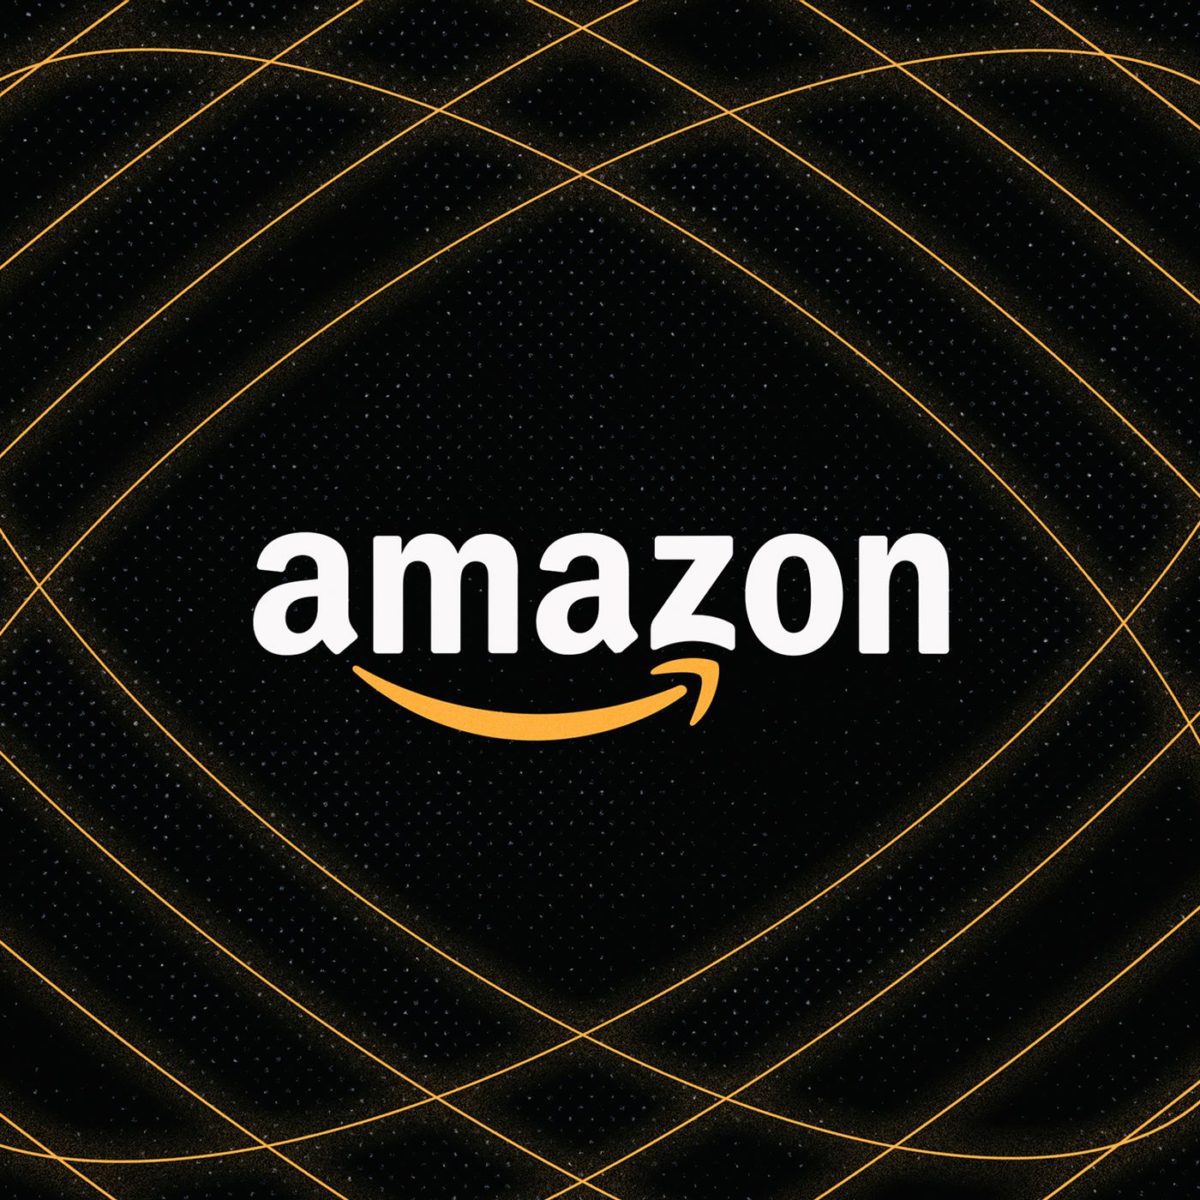 Amazon.com (AMZN:NSD) Analysts divergent on direction